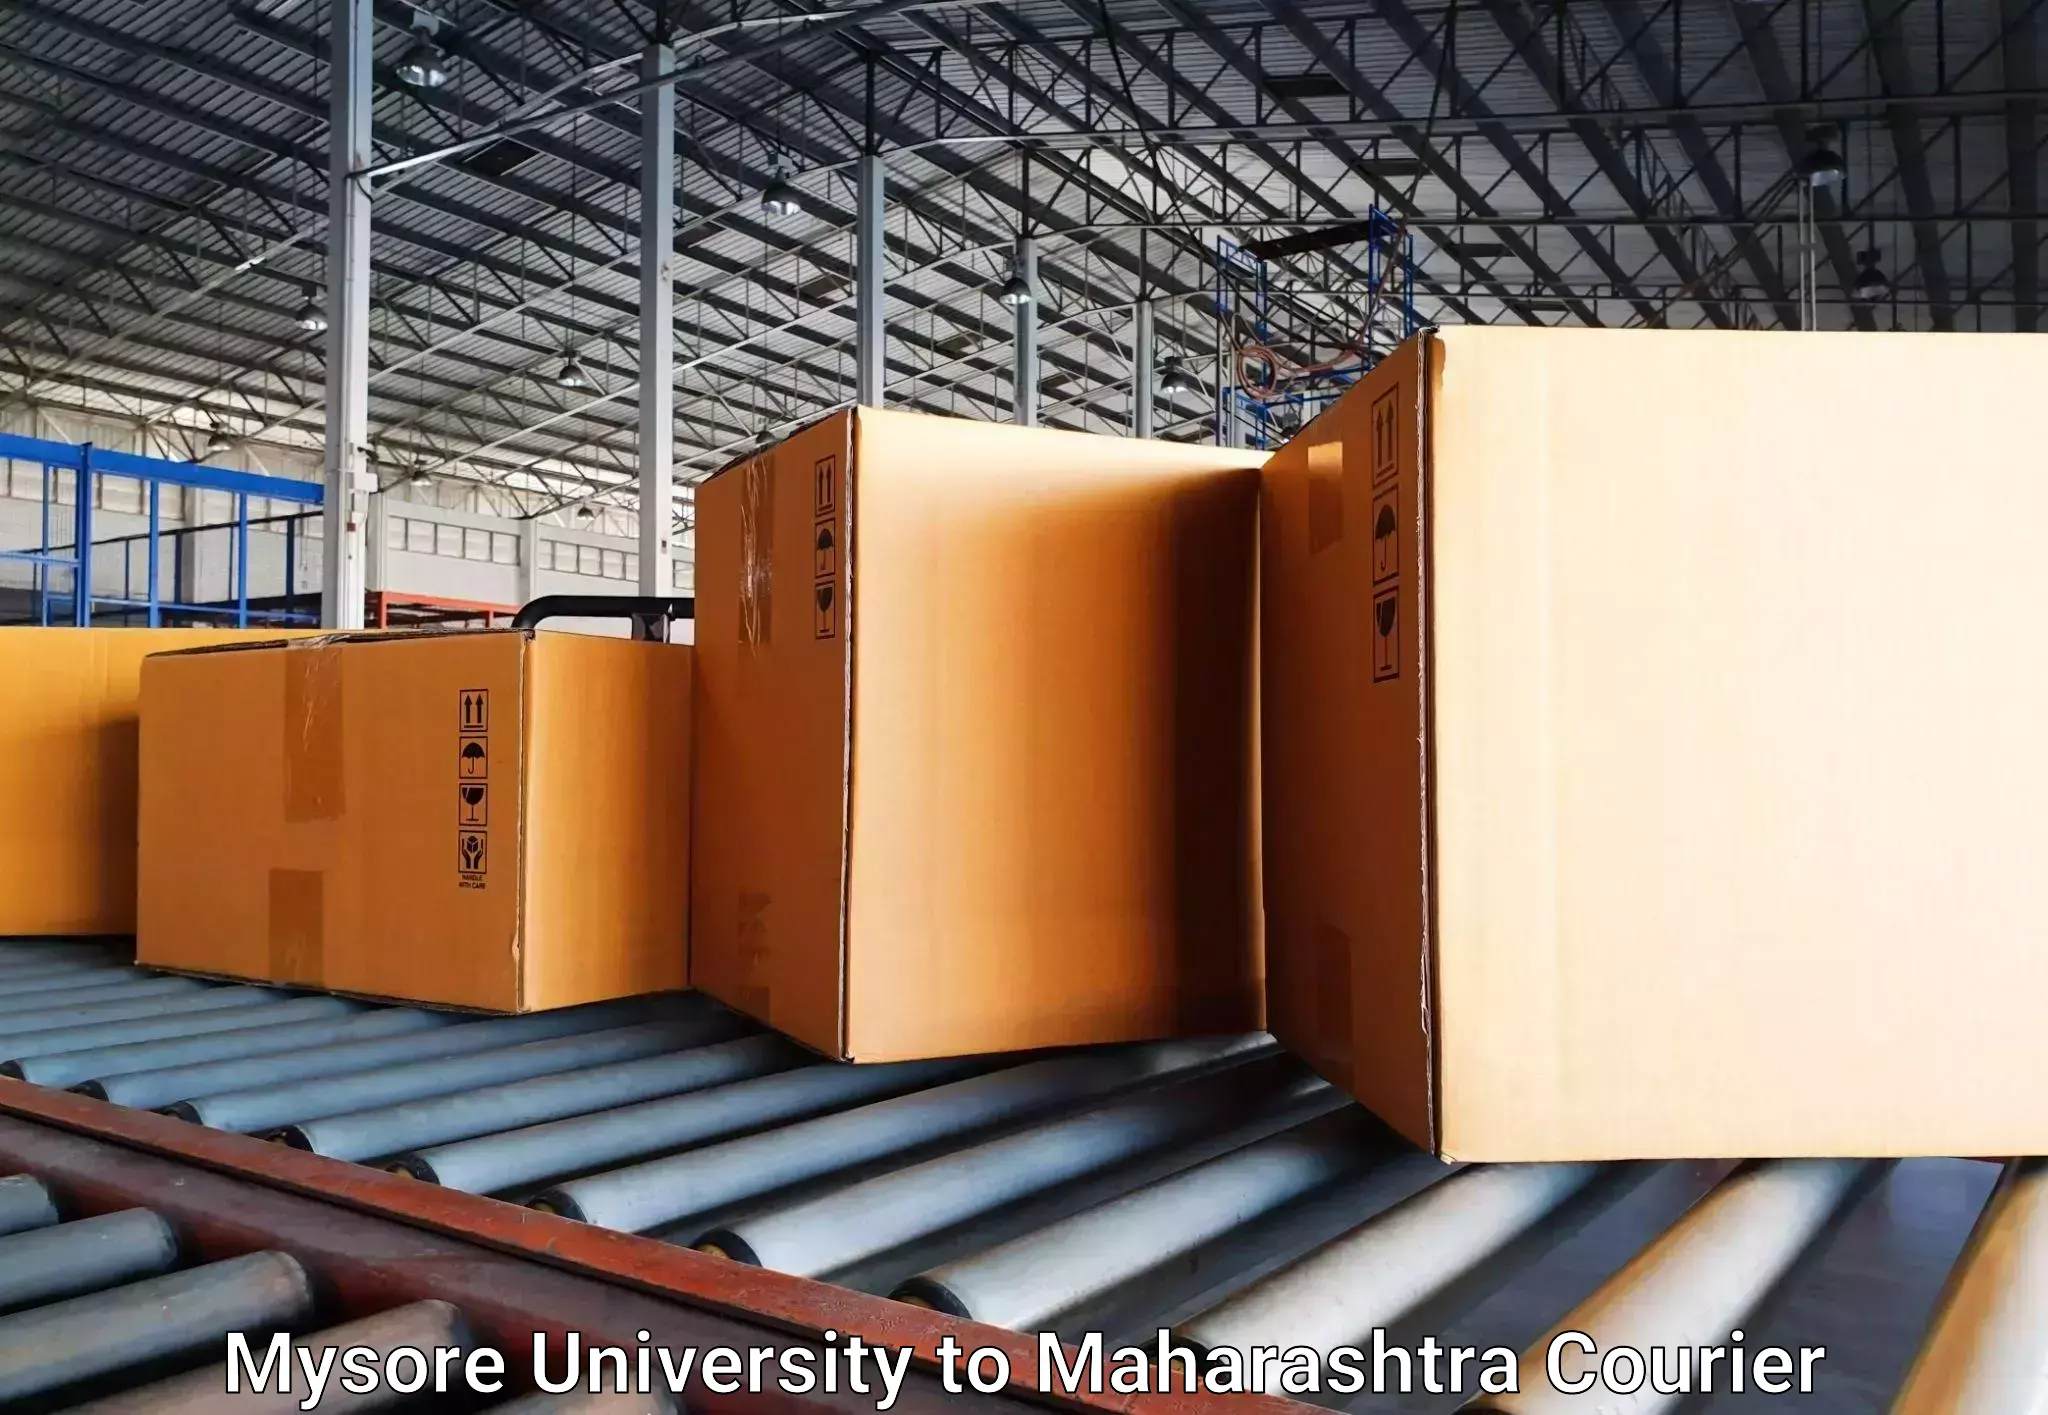 Baggage relocation service Mysore University to Mumbai Port